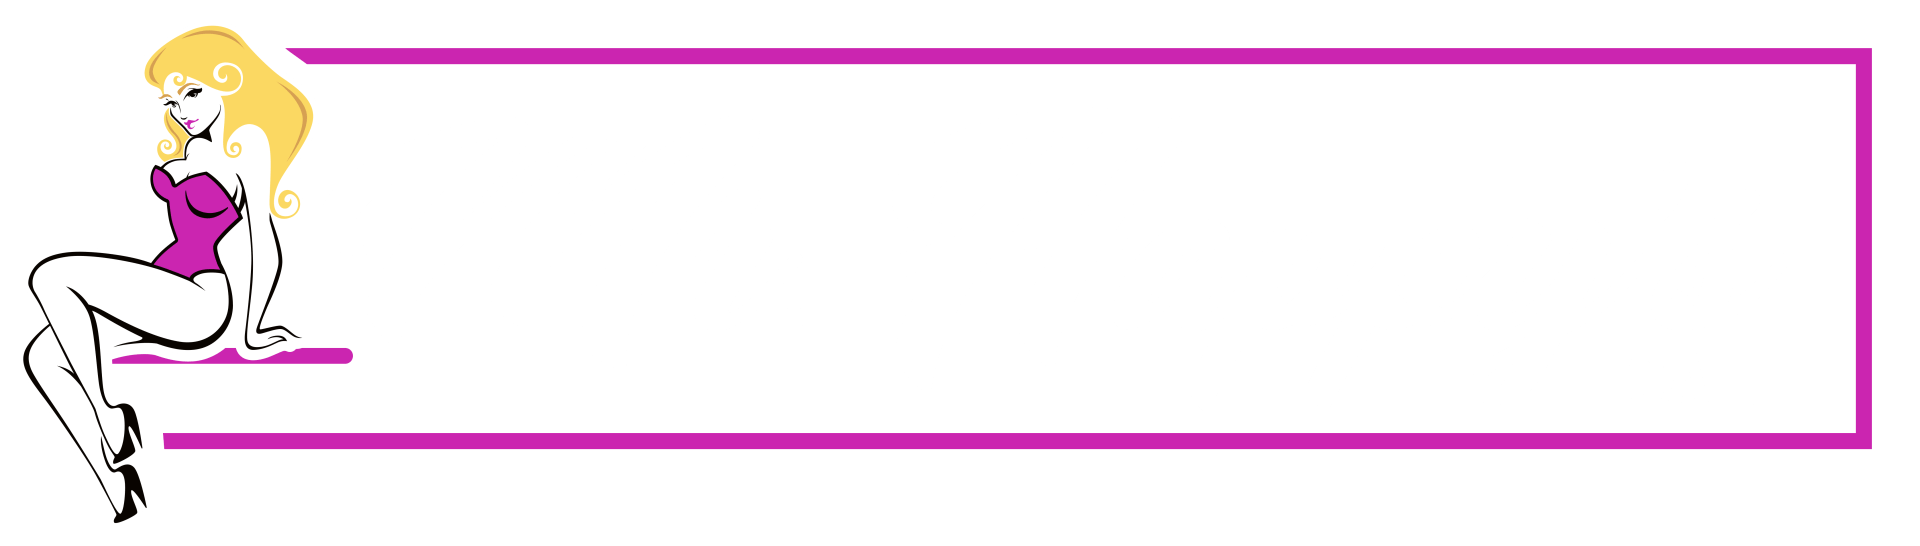 Mr. Happy's Cafe logo